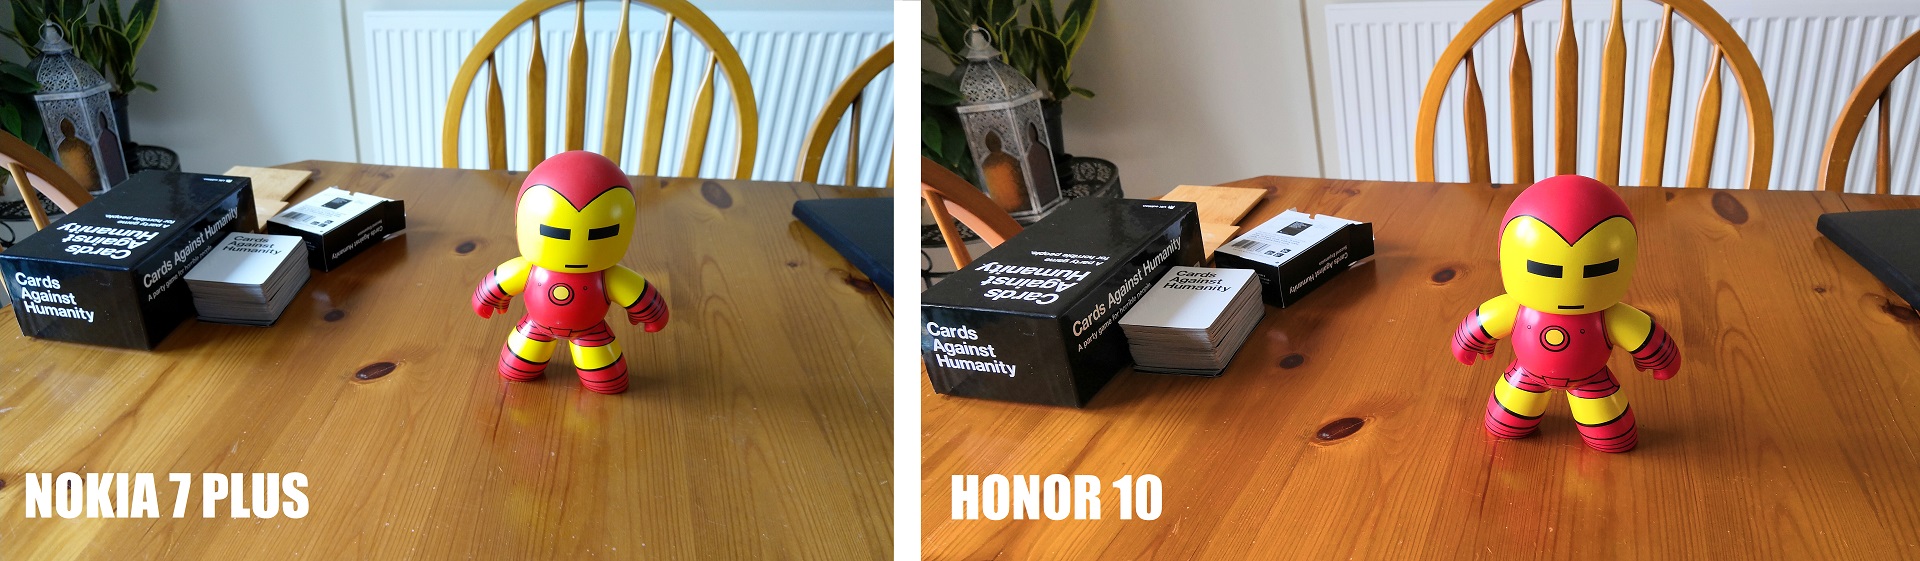 Nokia 7 Plus vs Honor 10 Camera